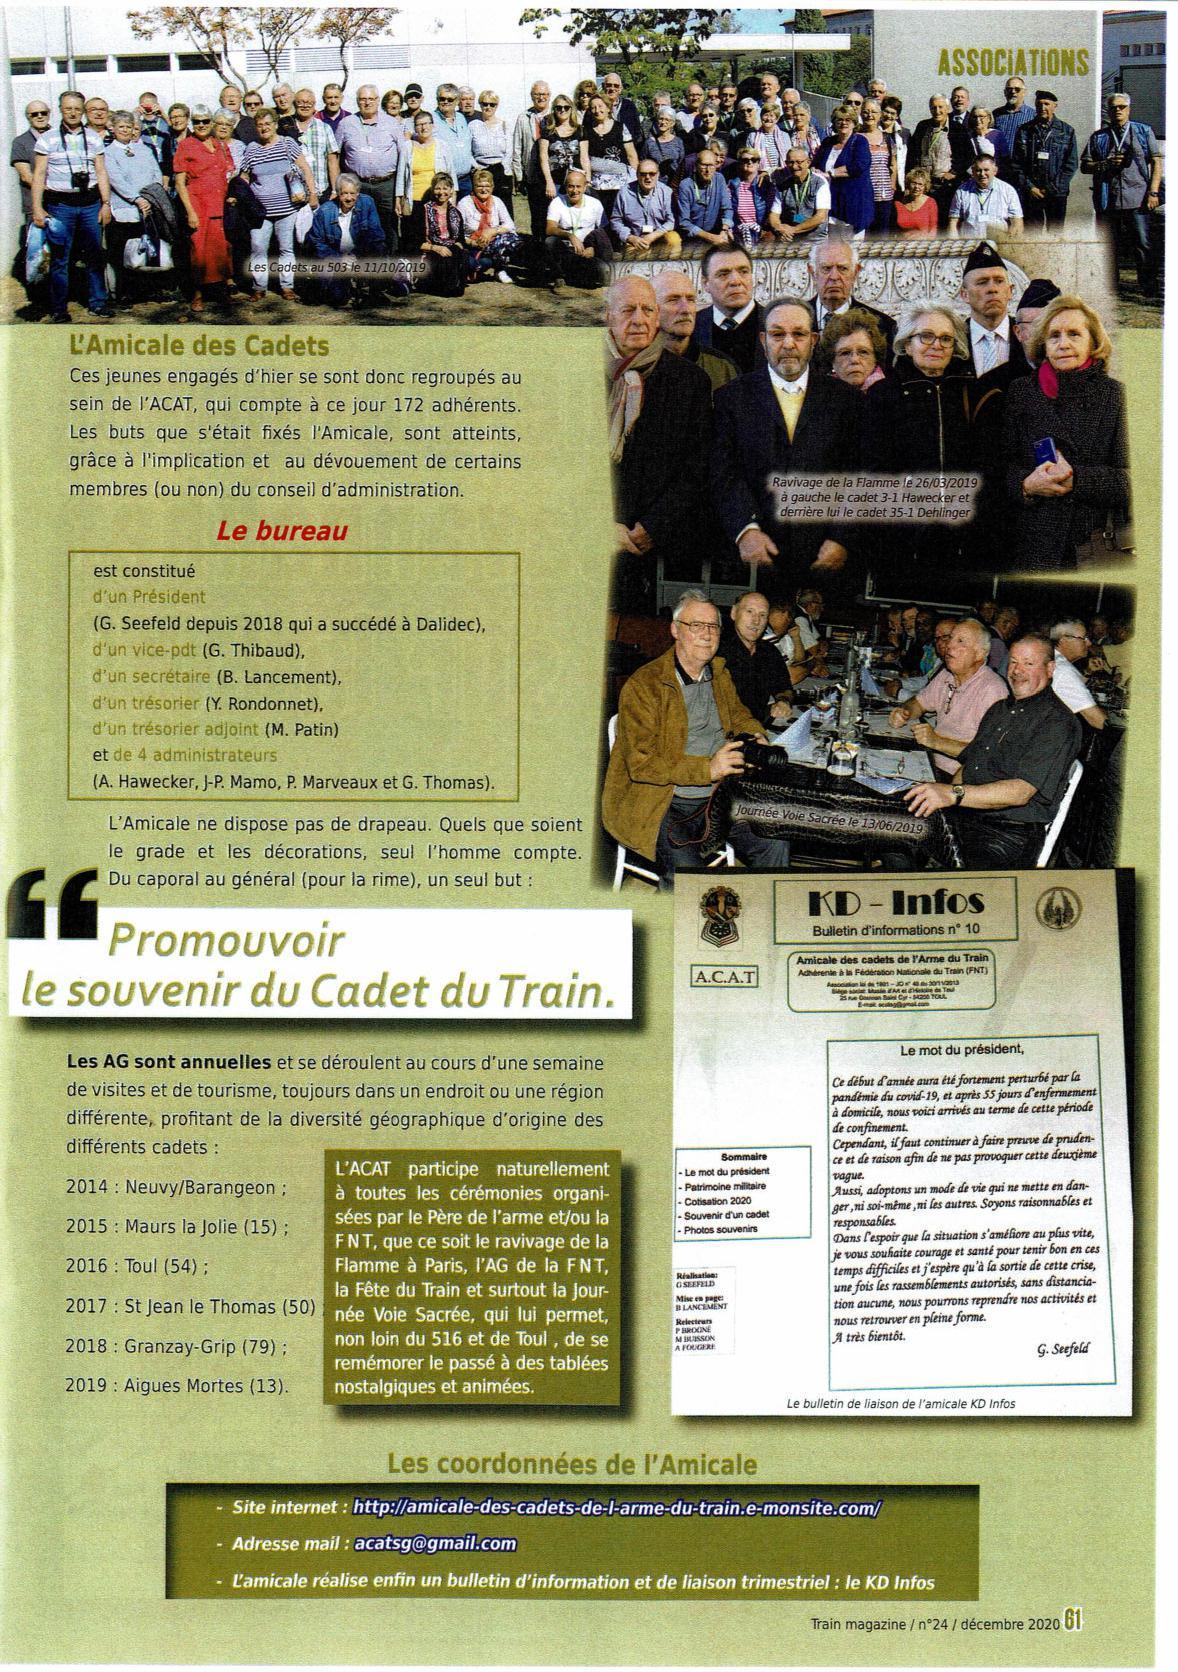 Train magazine n 24 dec 2020 062